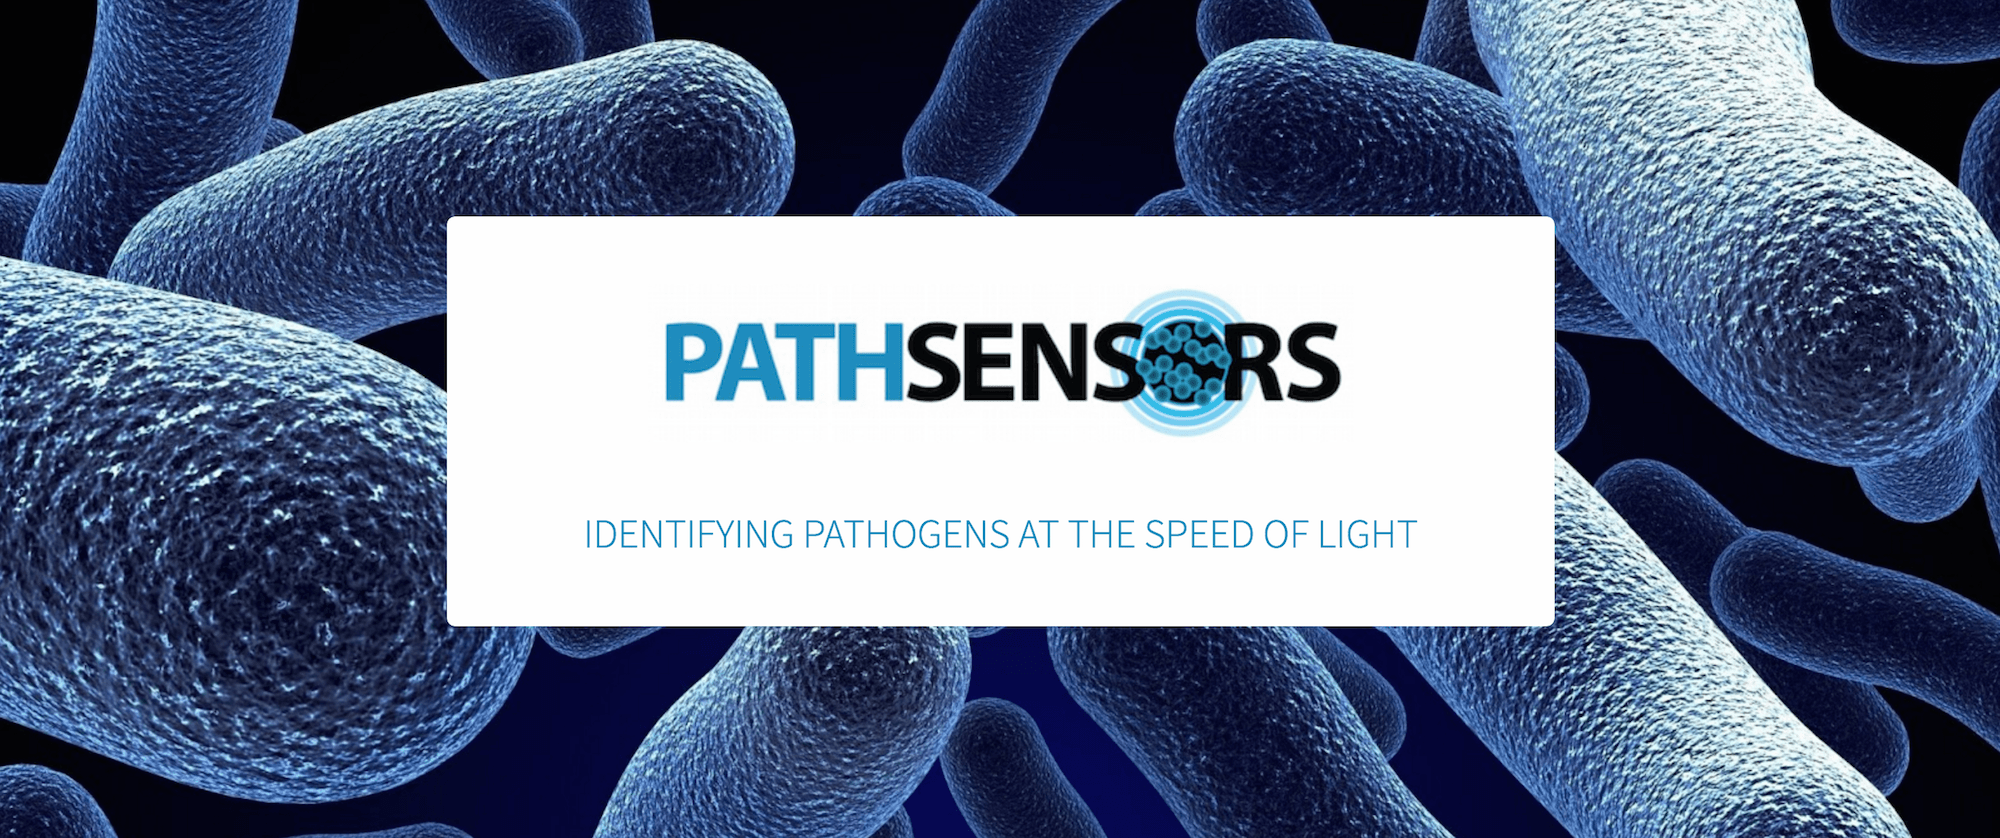 Pathogen Logo - Bio Tech Firm PathSensors Enters Fast Growing Chinese Pathogen